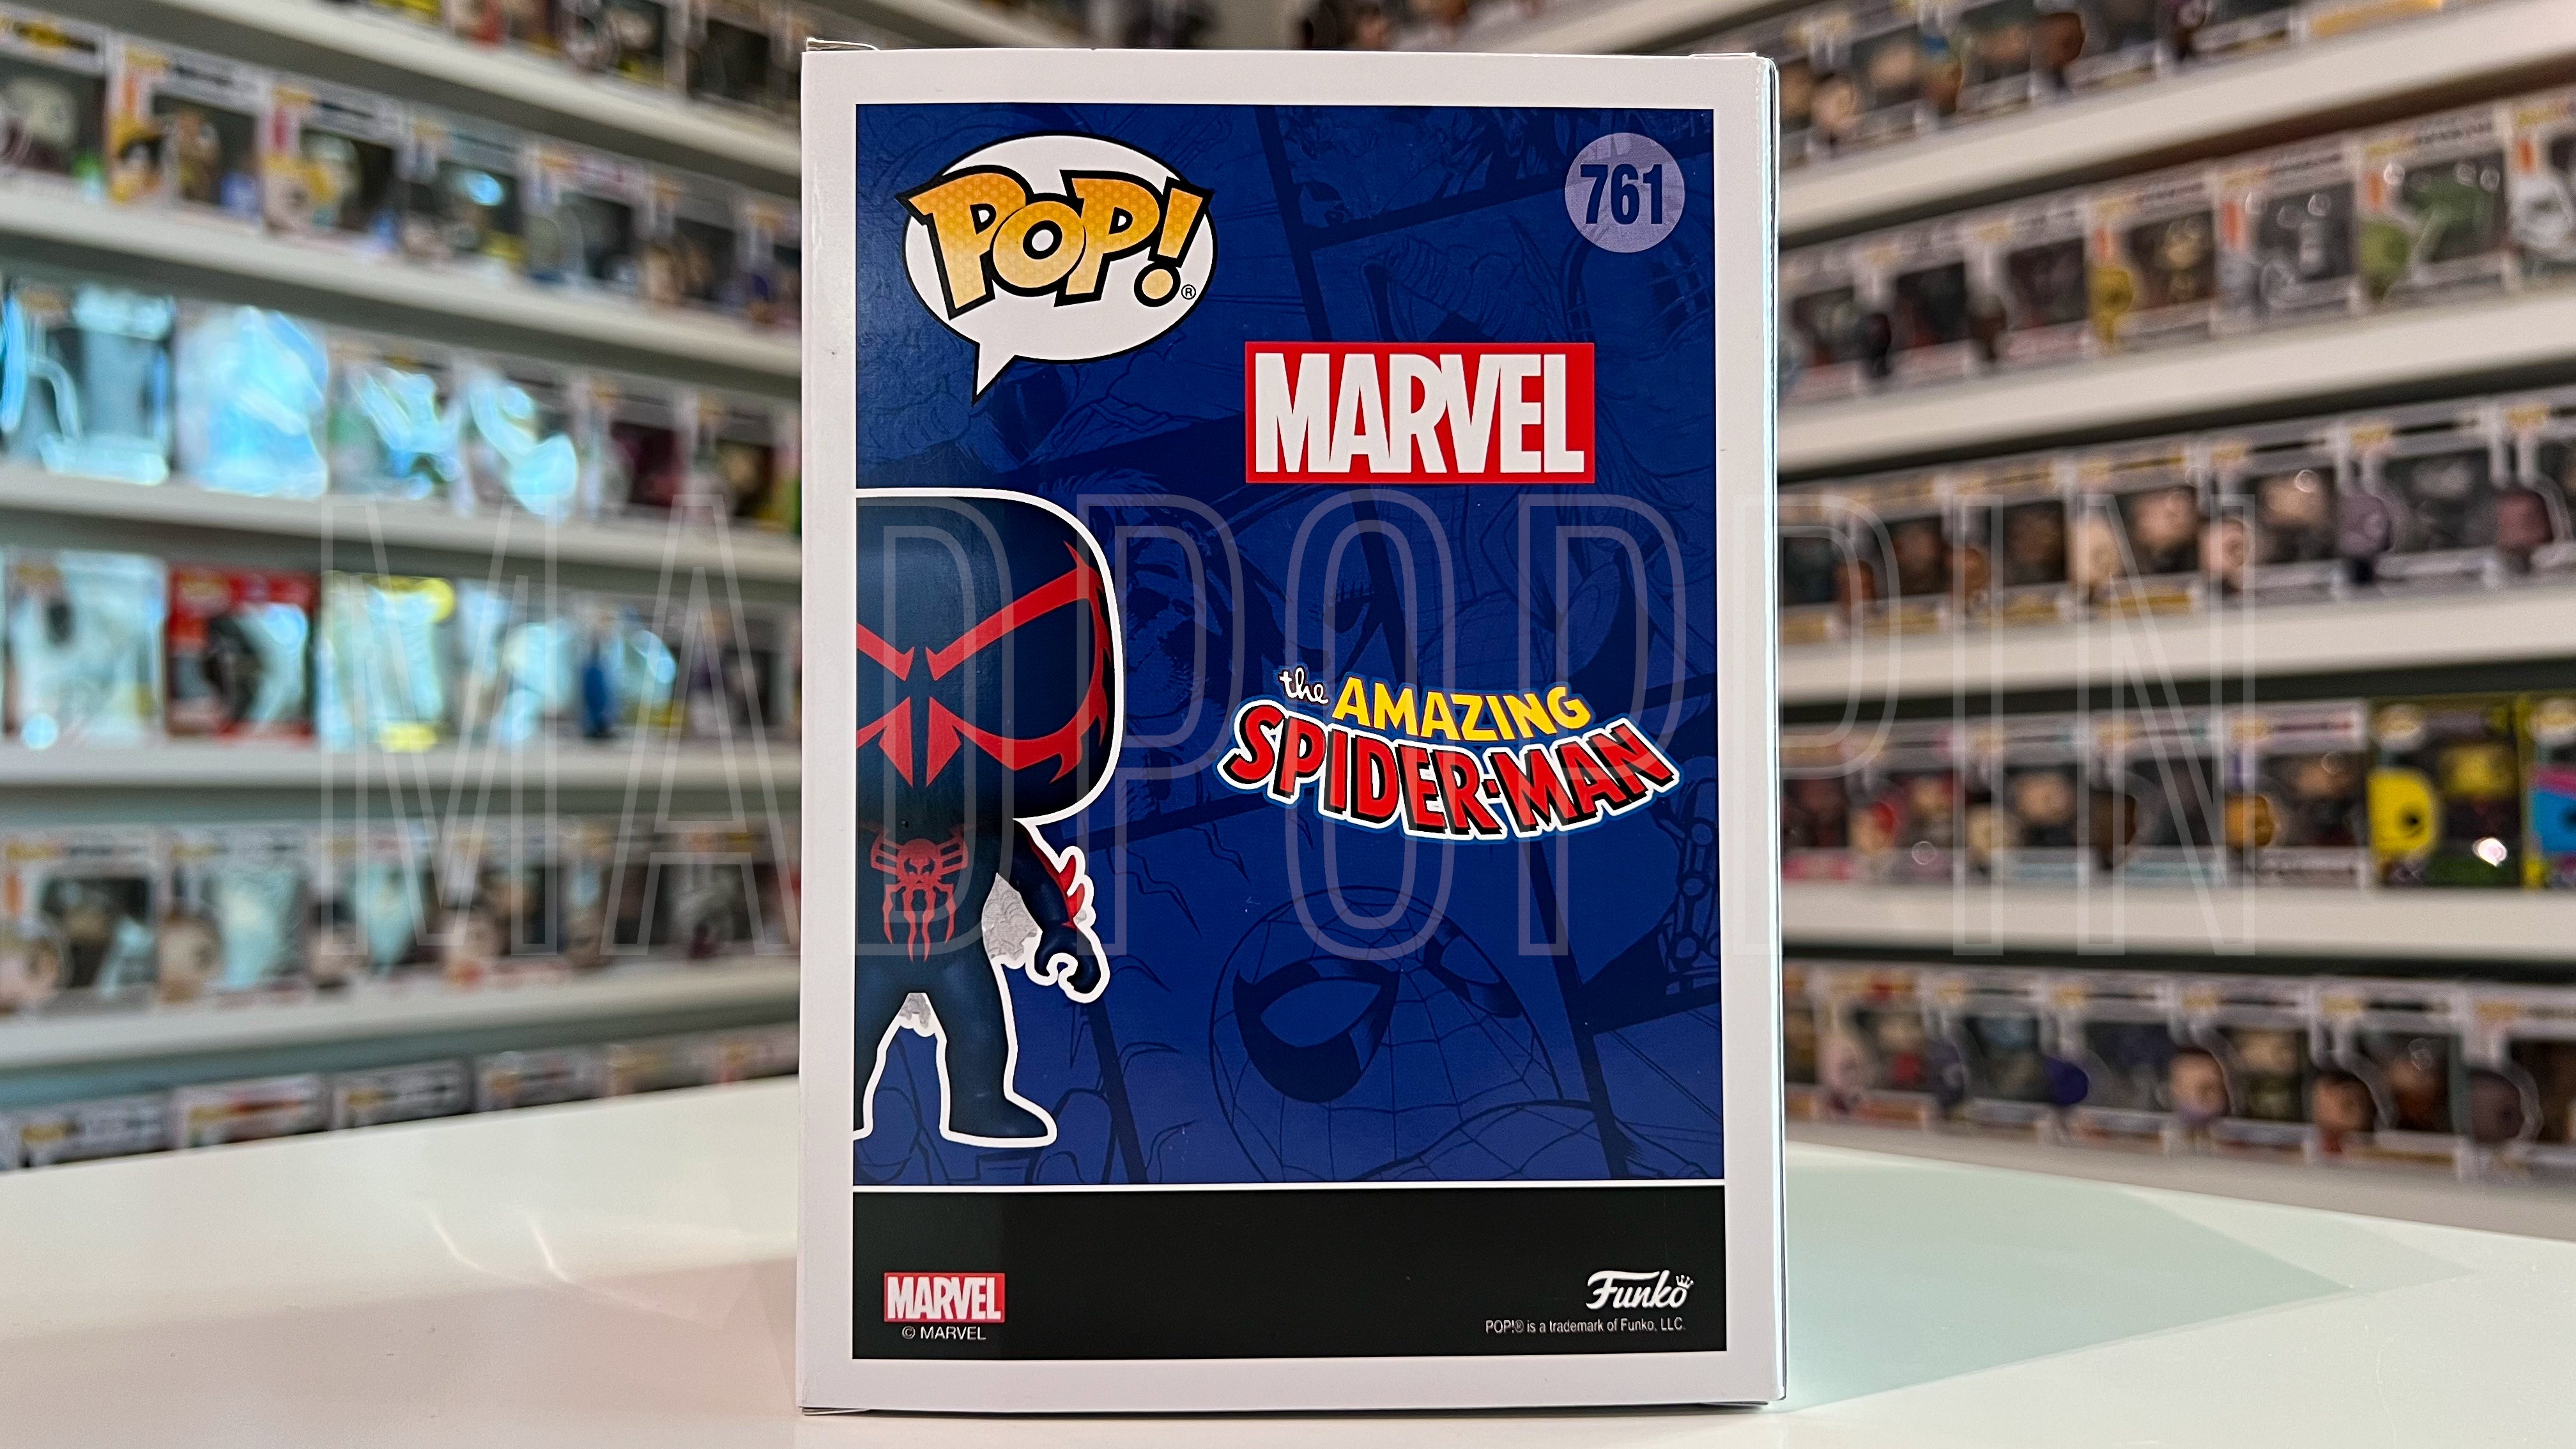 POP! Marvel - Marvel The Amazing Spider-Man- Spider-Man 2099